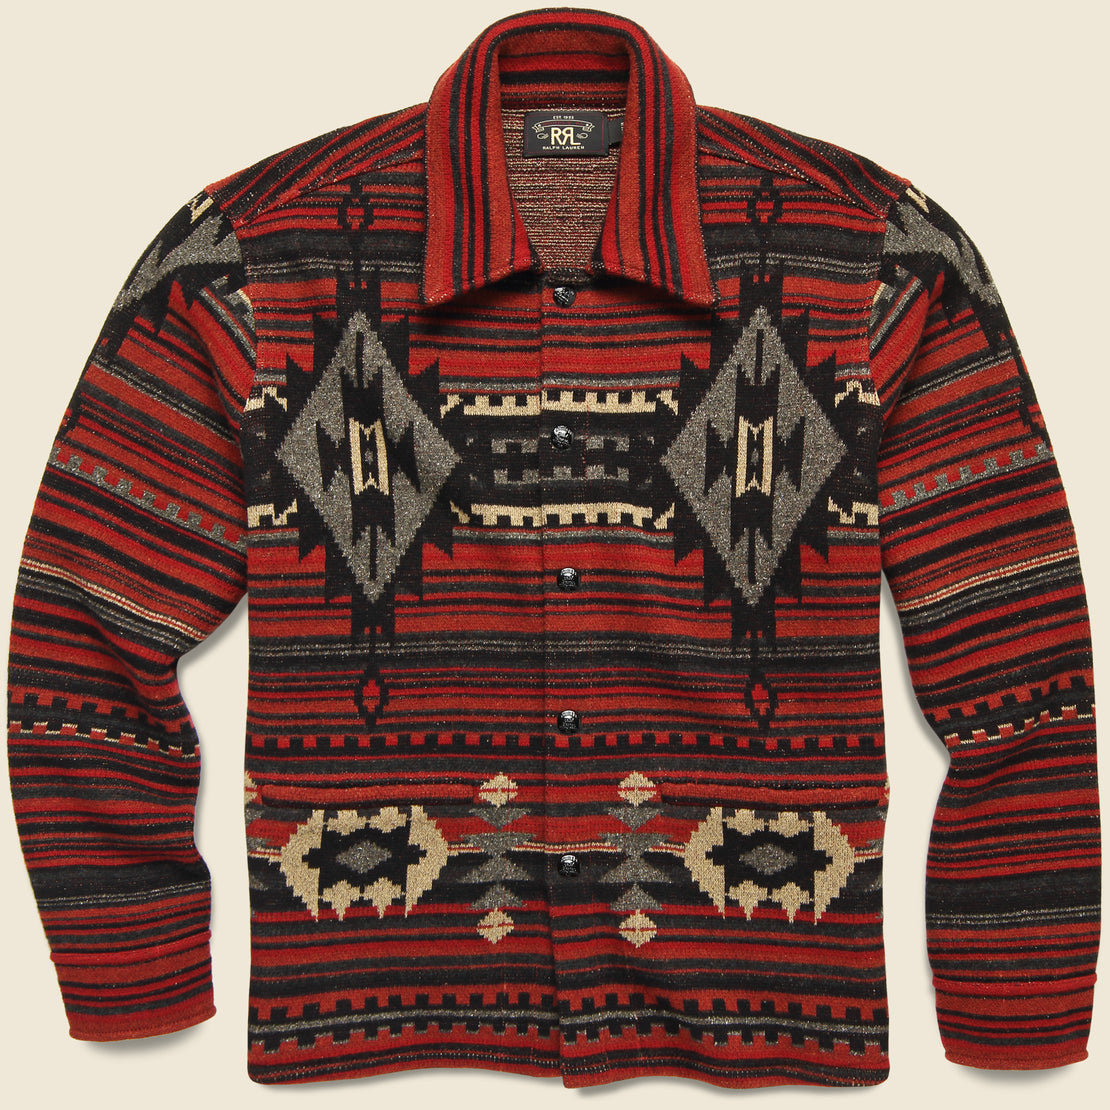 RRL Wool-Blend Jacquard Workshirt Sweater - Red/Black